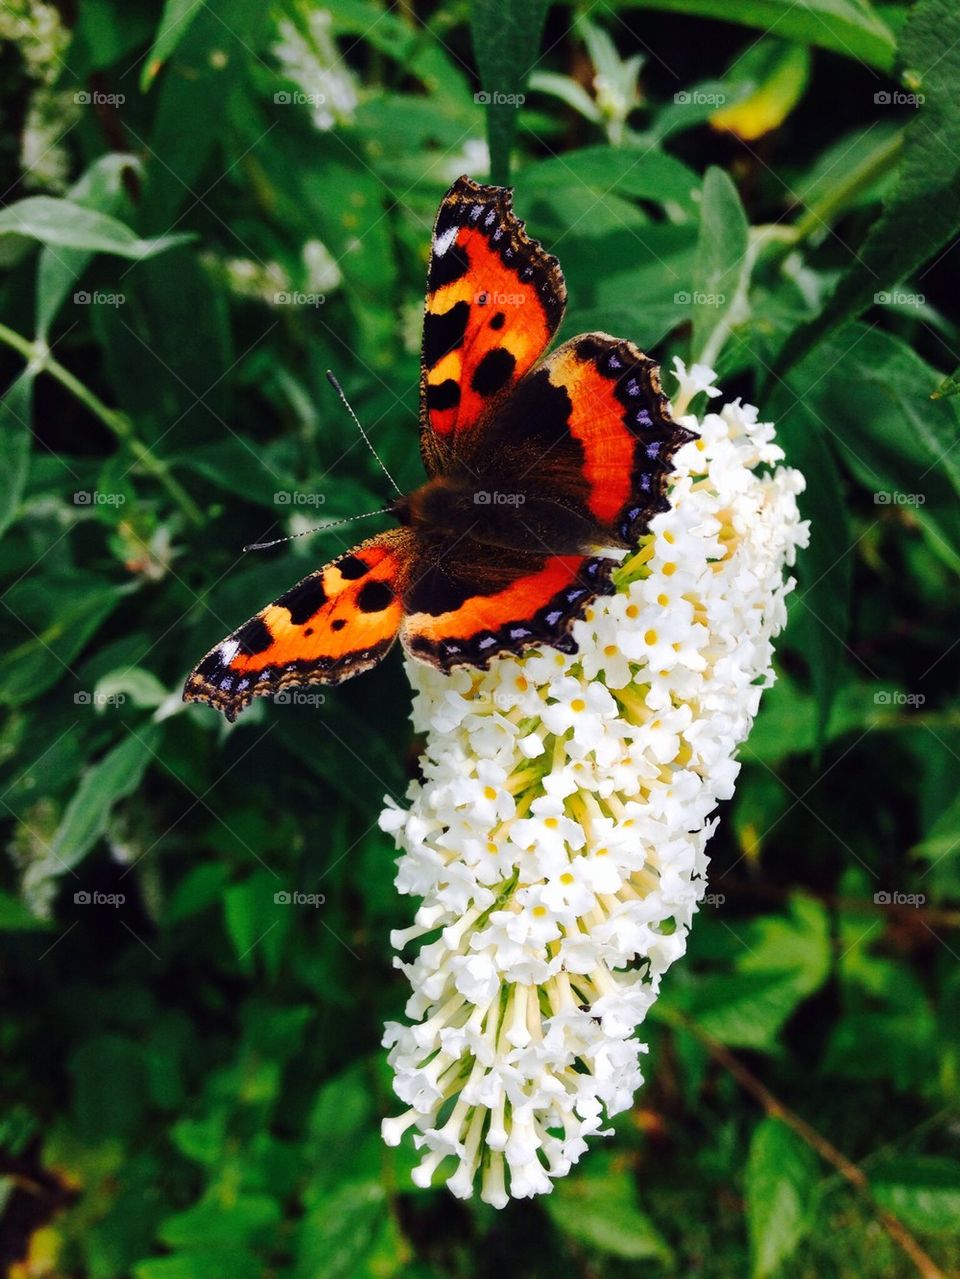 Butterfly on a buddleia